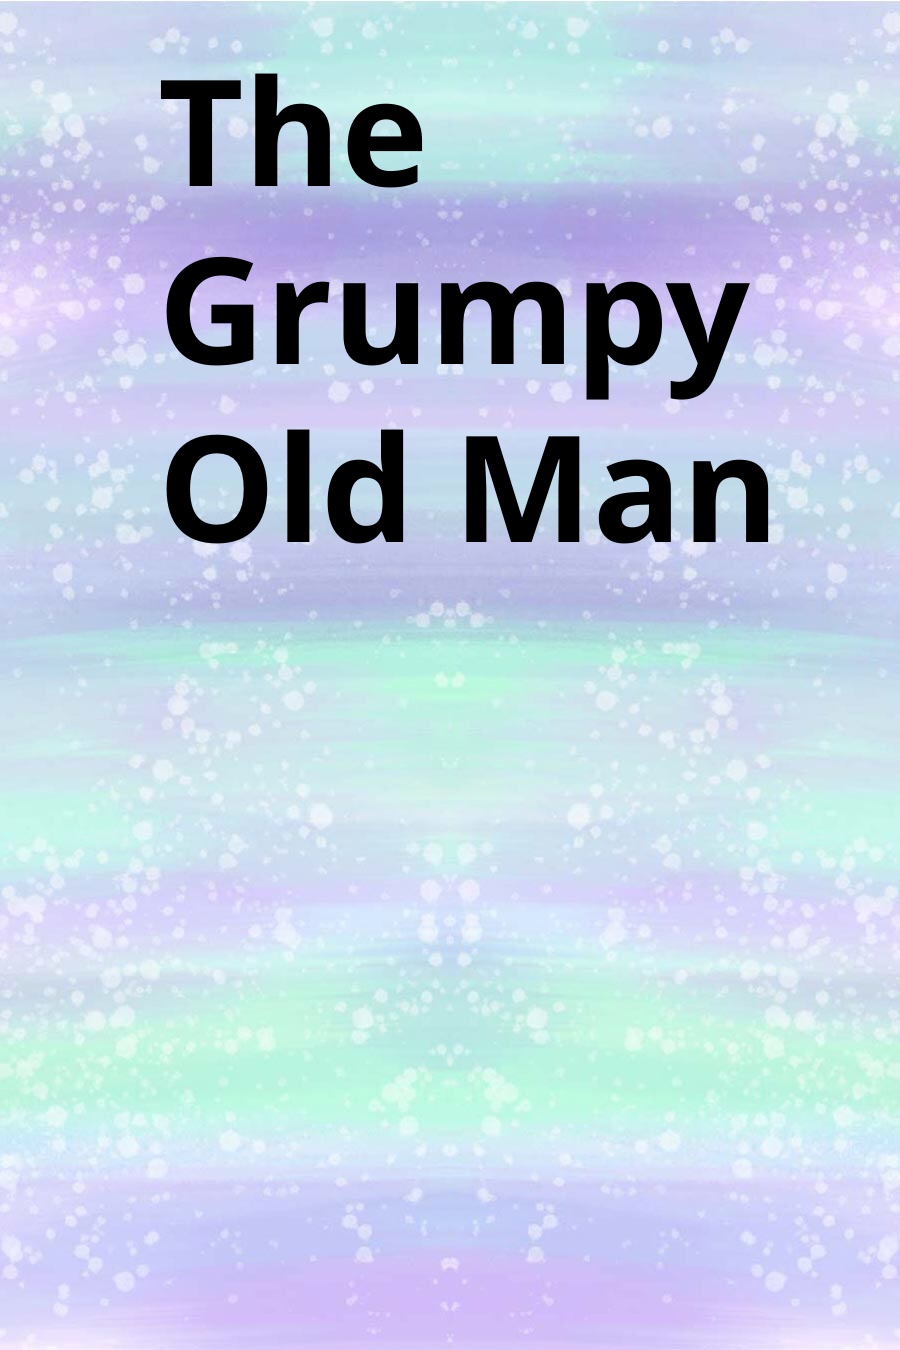 The Grumpy Old Man by Martin L